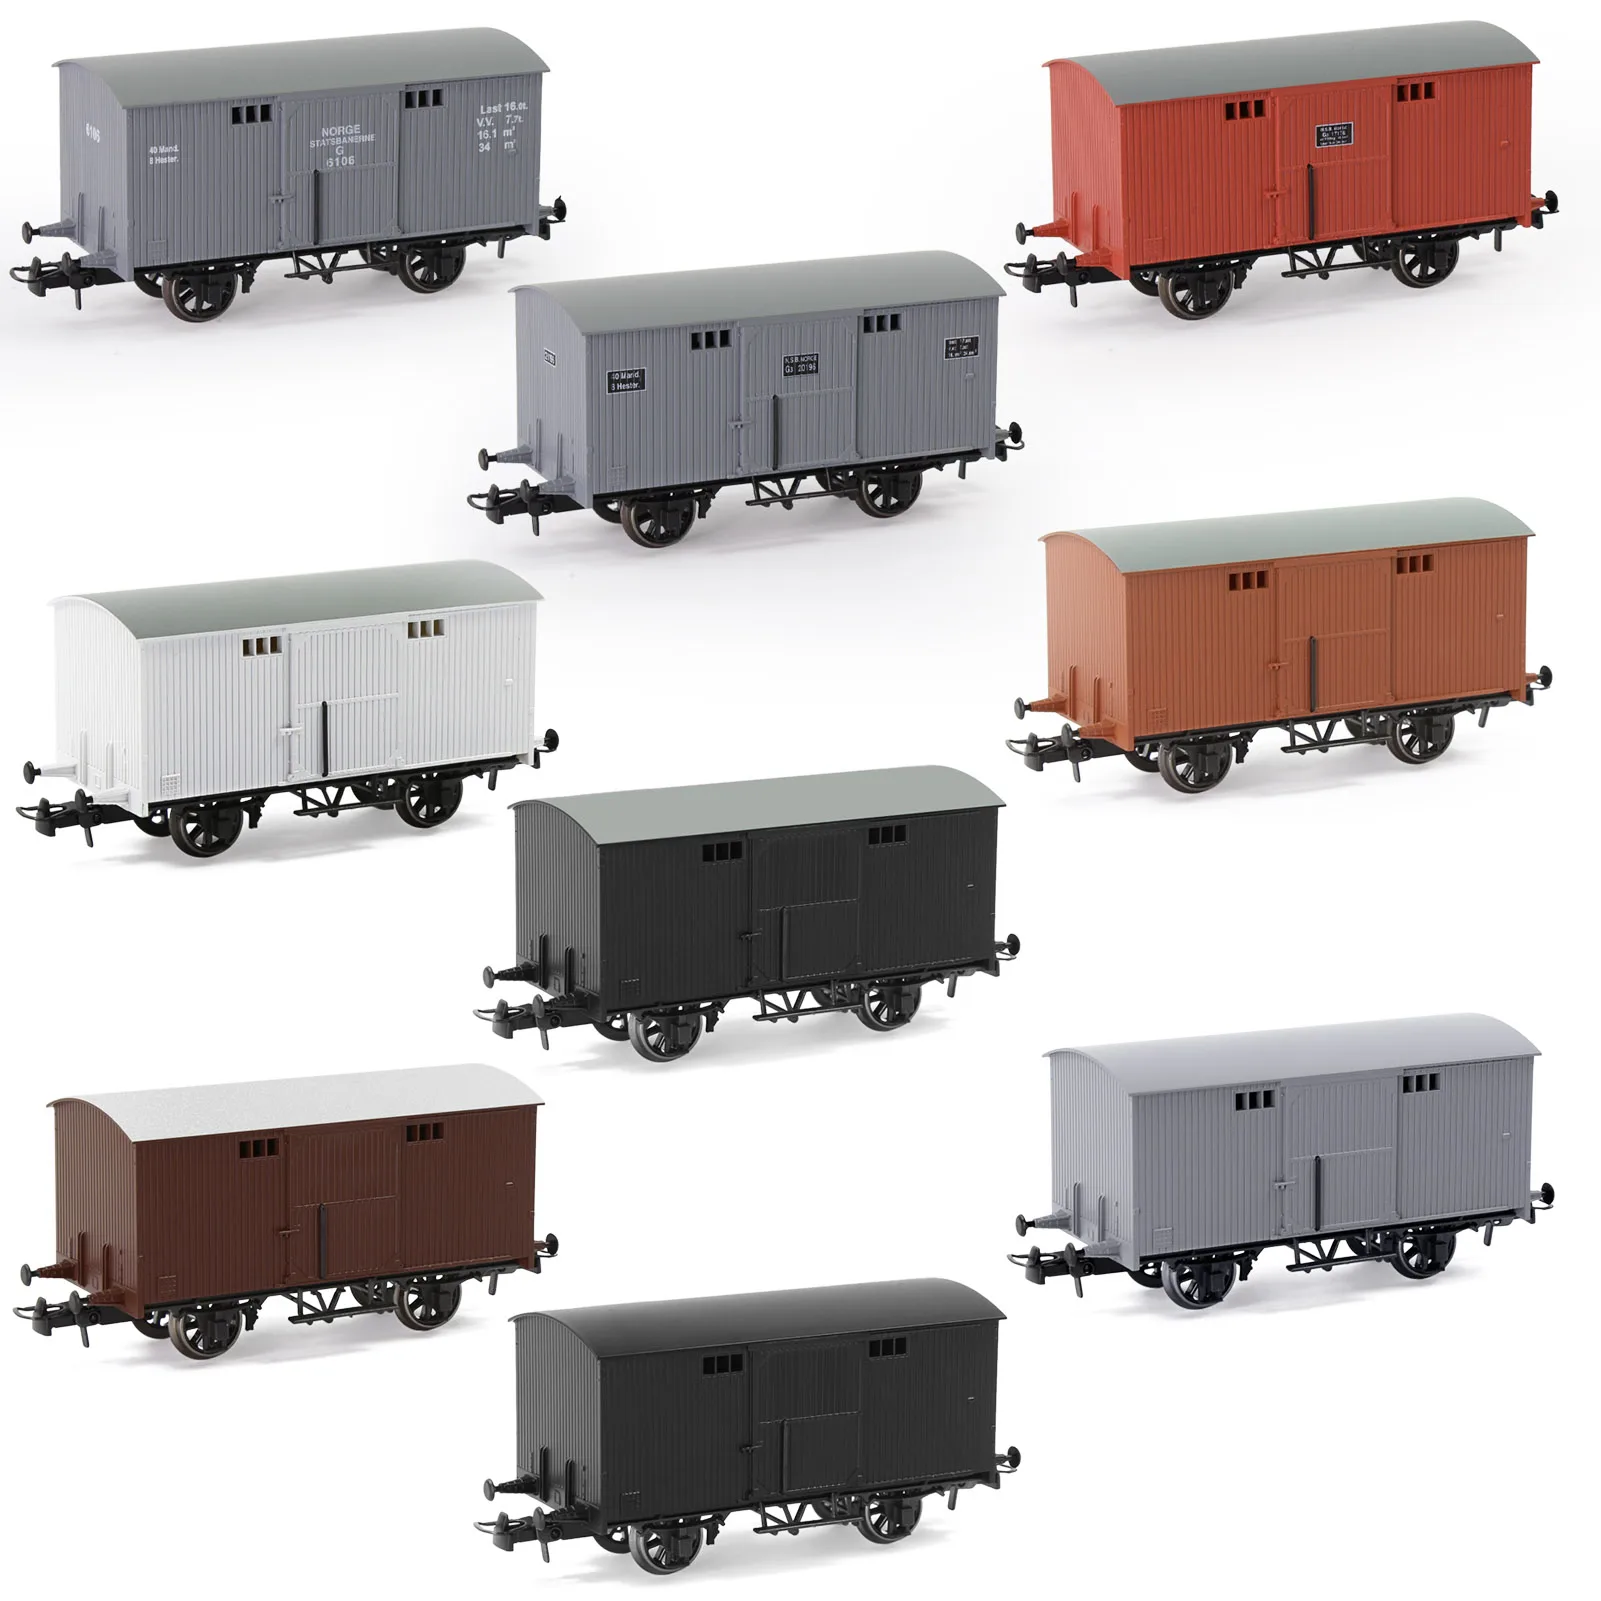 

Evemodel 3pcs Model Trains HO Scale 1:87 20ft Box Car Wagon 20' Railway Boxcars C8728